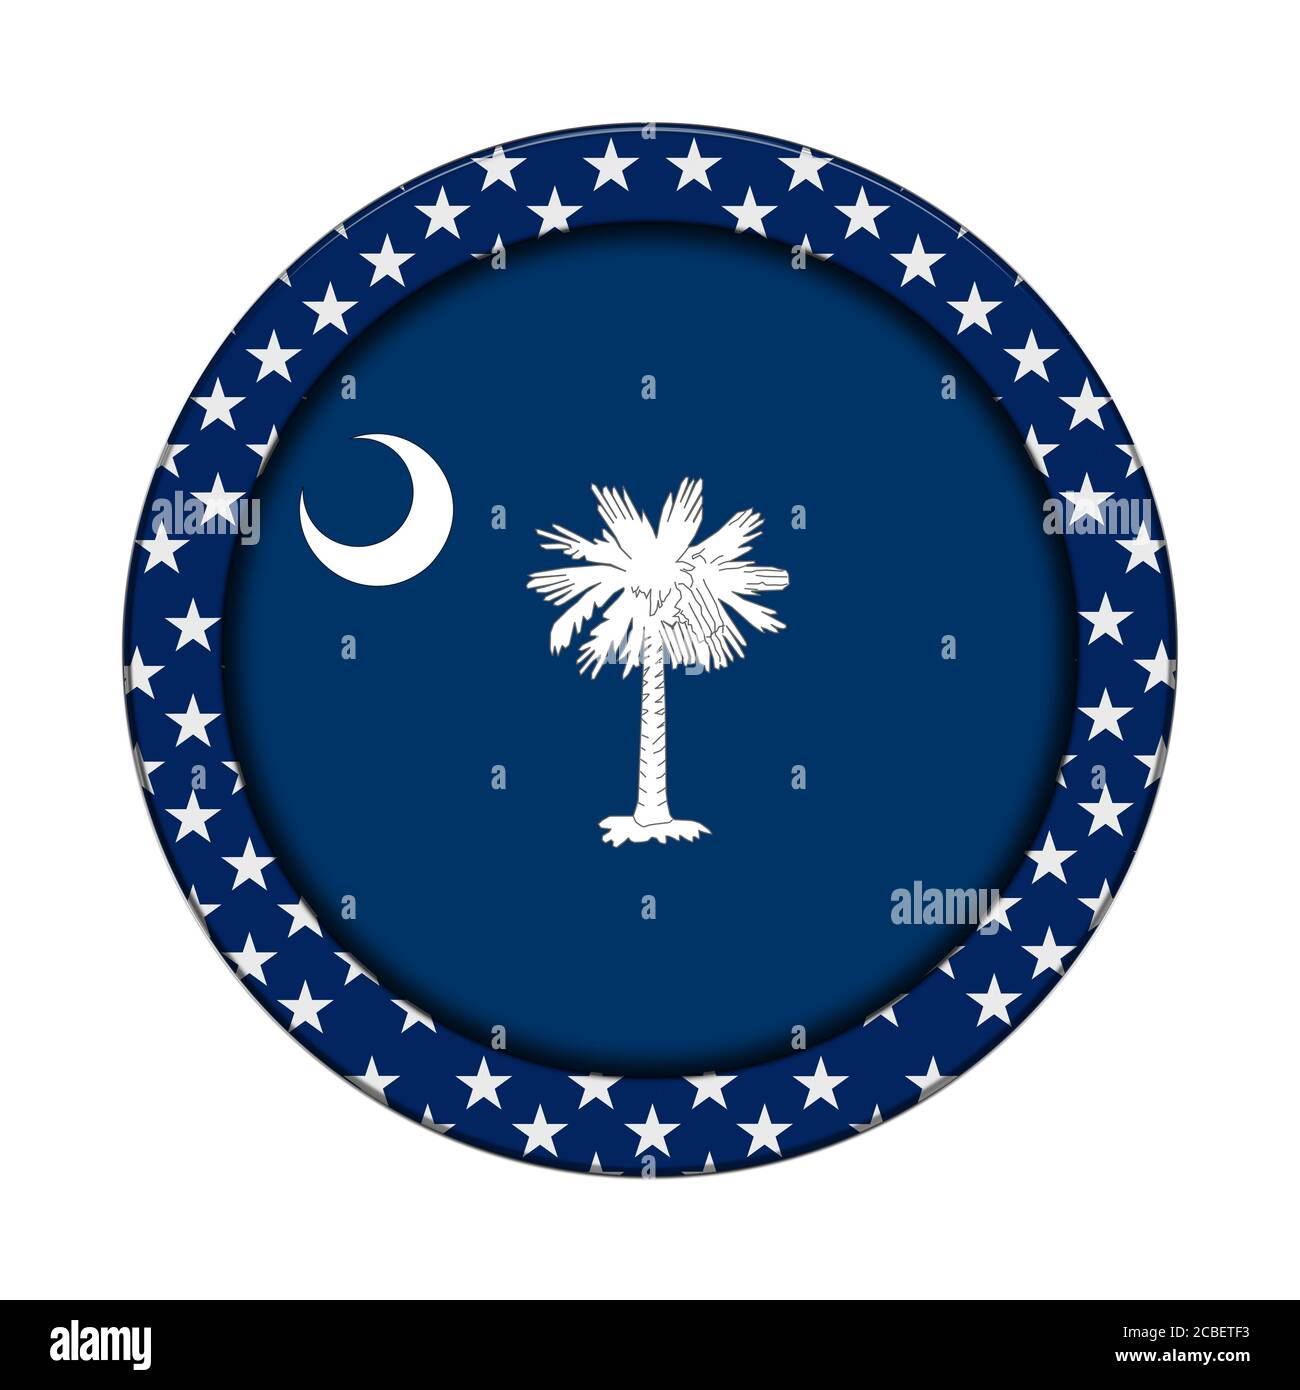 South Carolina flag Stock Photo